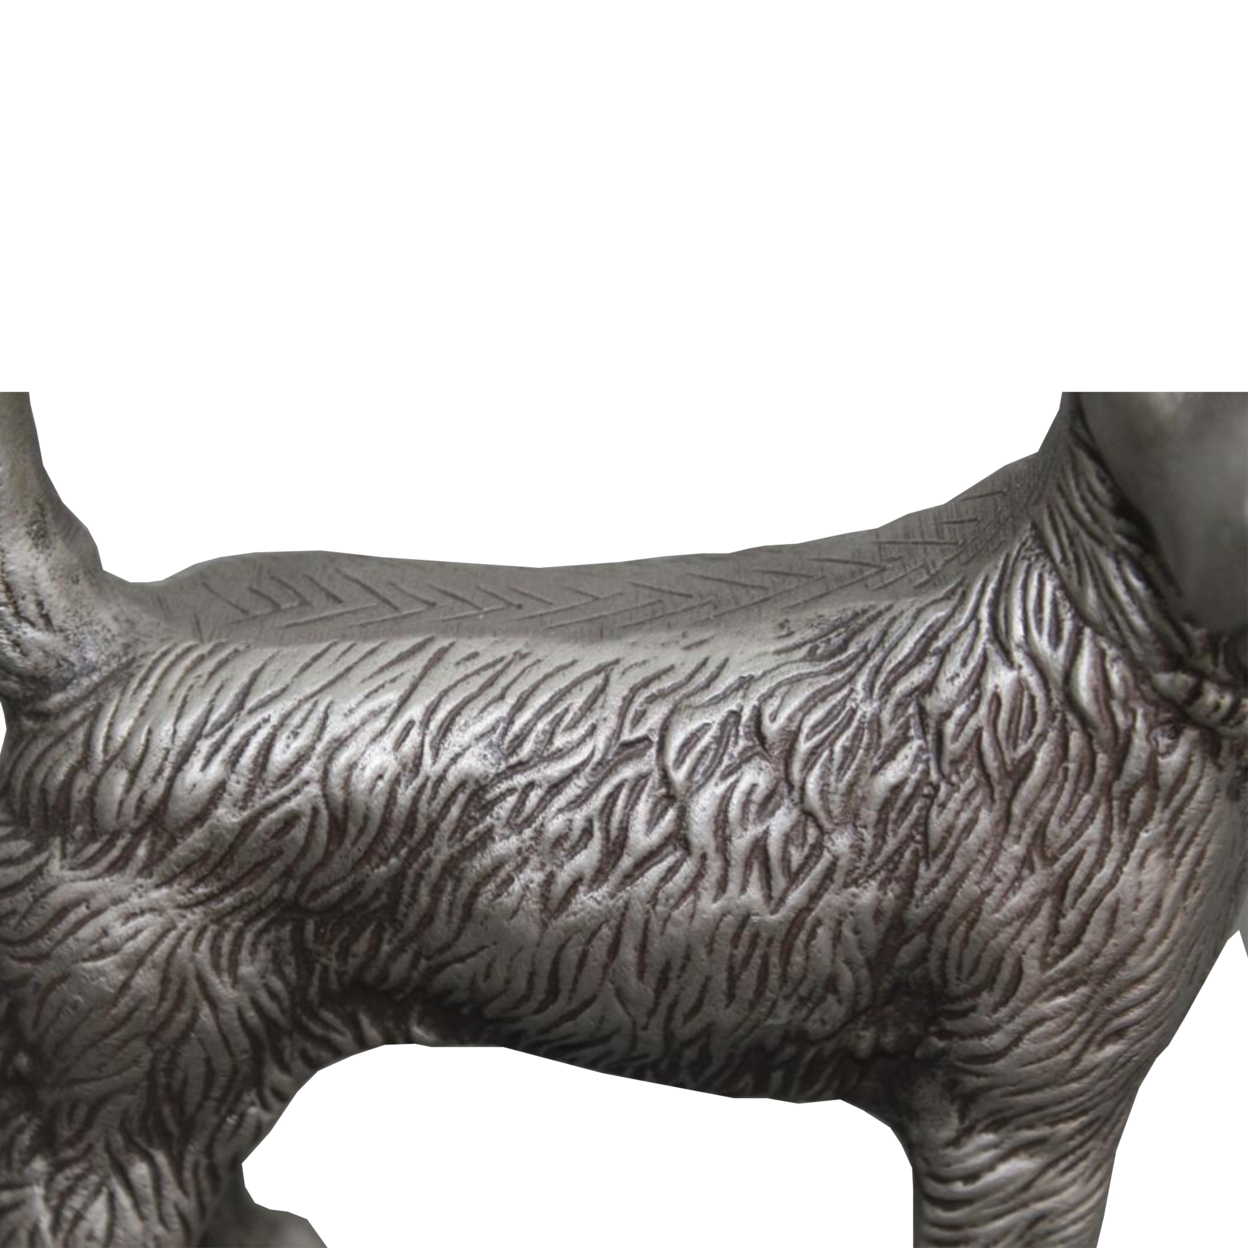 Aluminum Table Accent Dog Statuette Decor Sculpture With Textured Details, Silver- Saltoro Sherpi